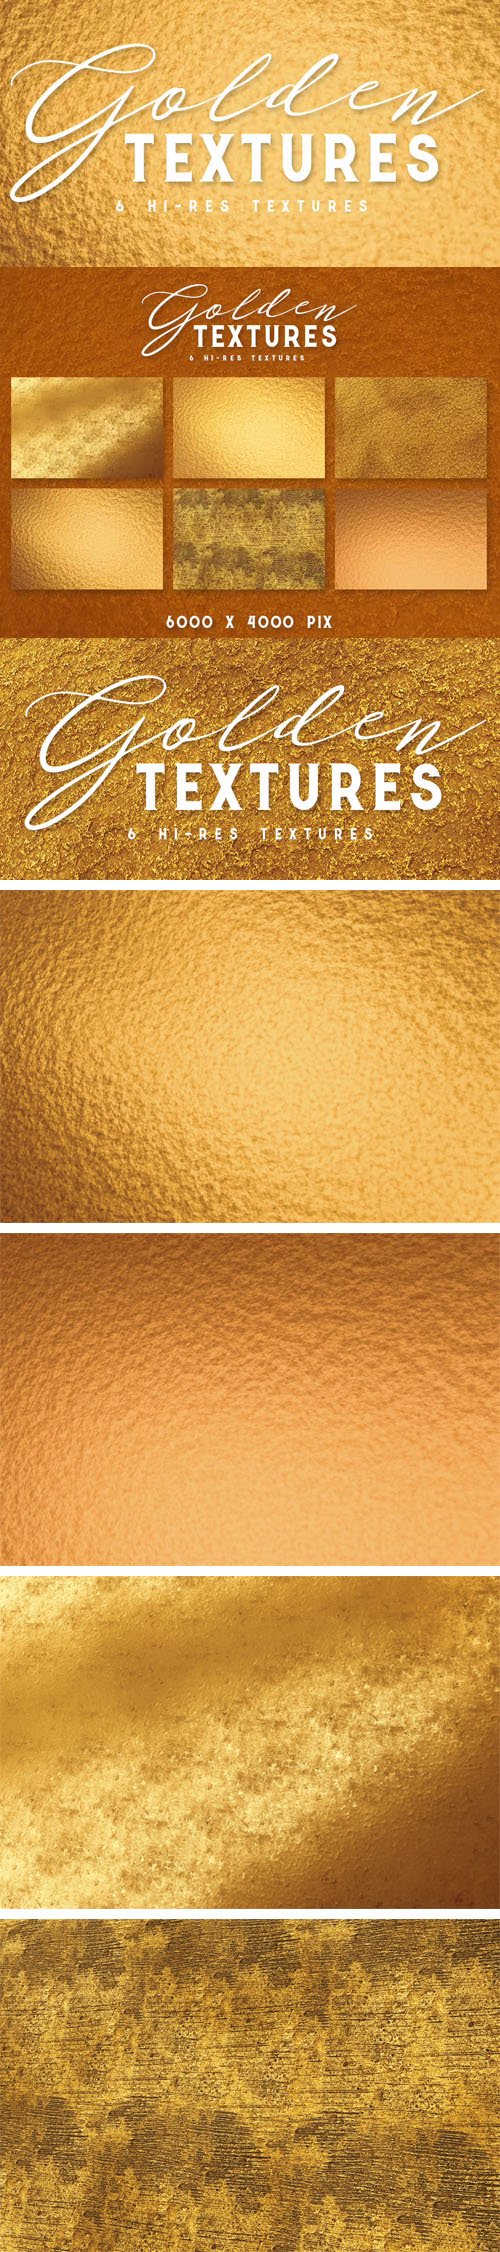 6 Hi-Res Golden Textures Collection